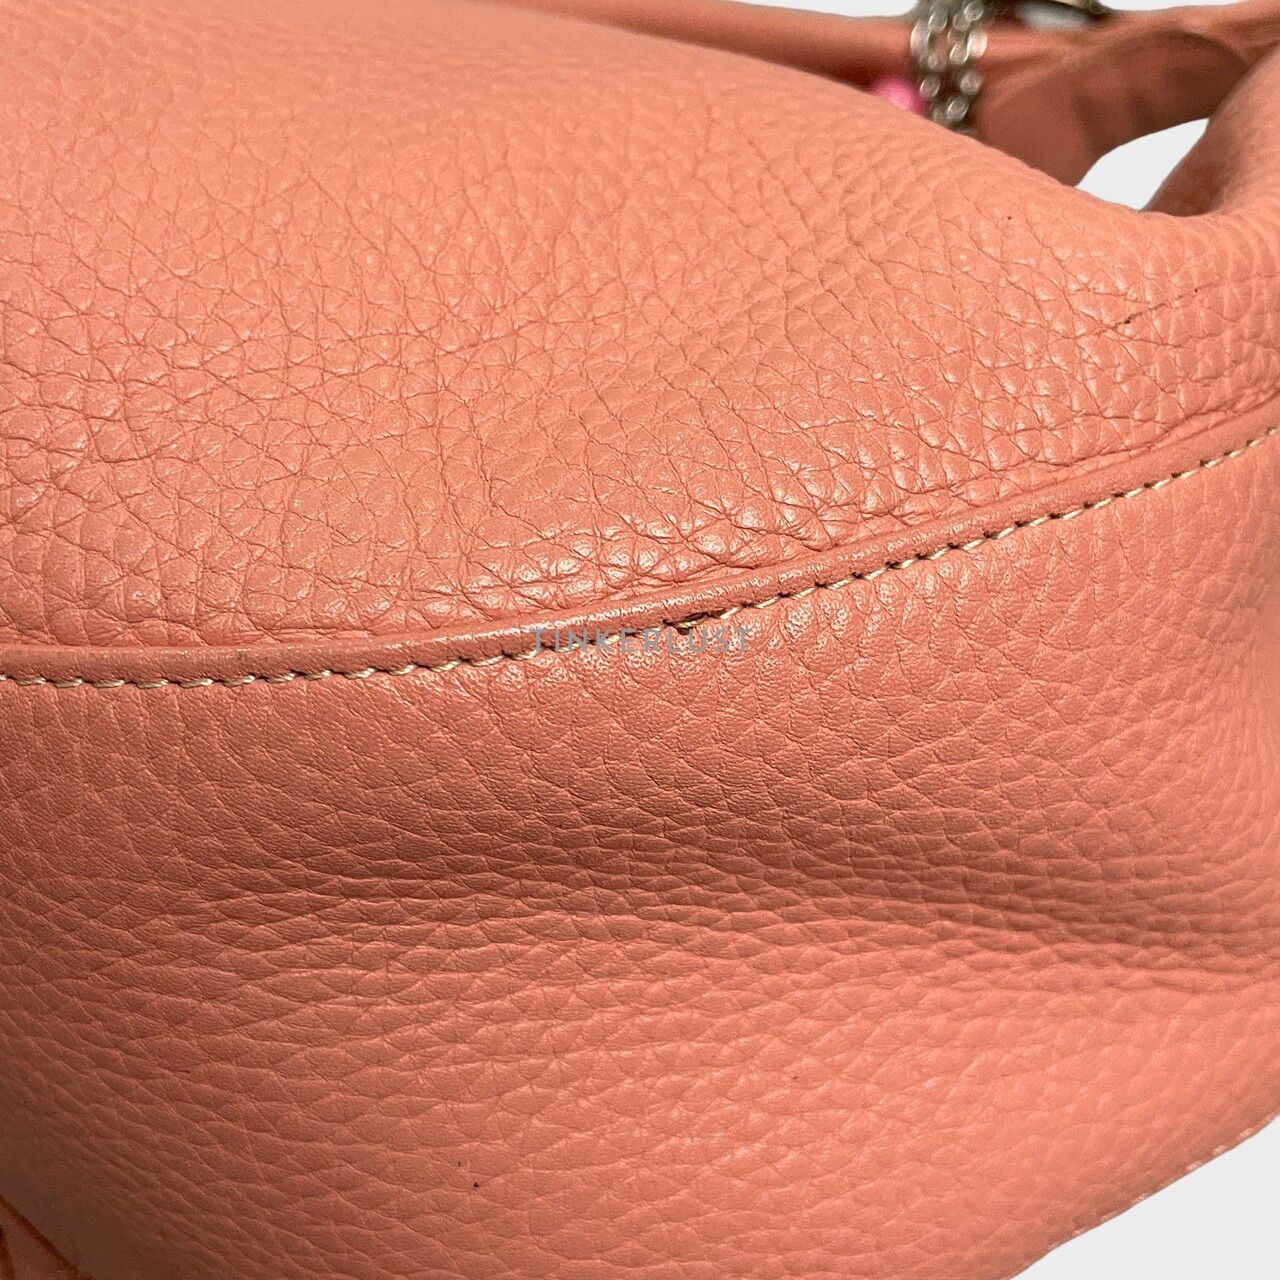 Braun Buffel Pink Shoulder Bag